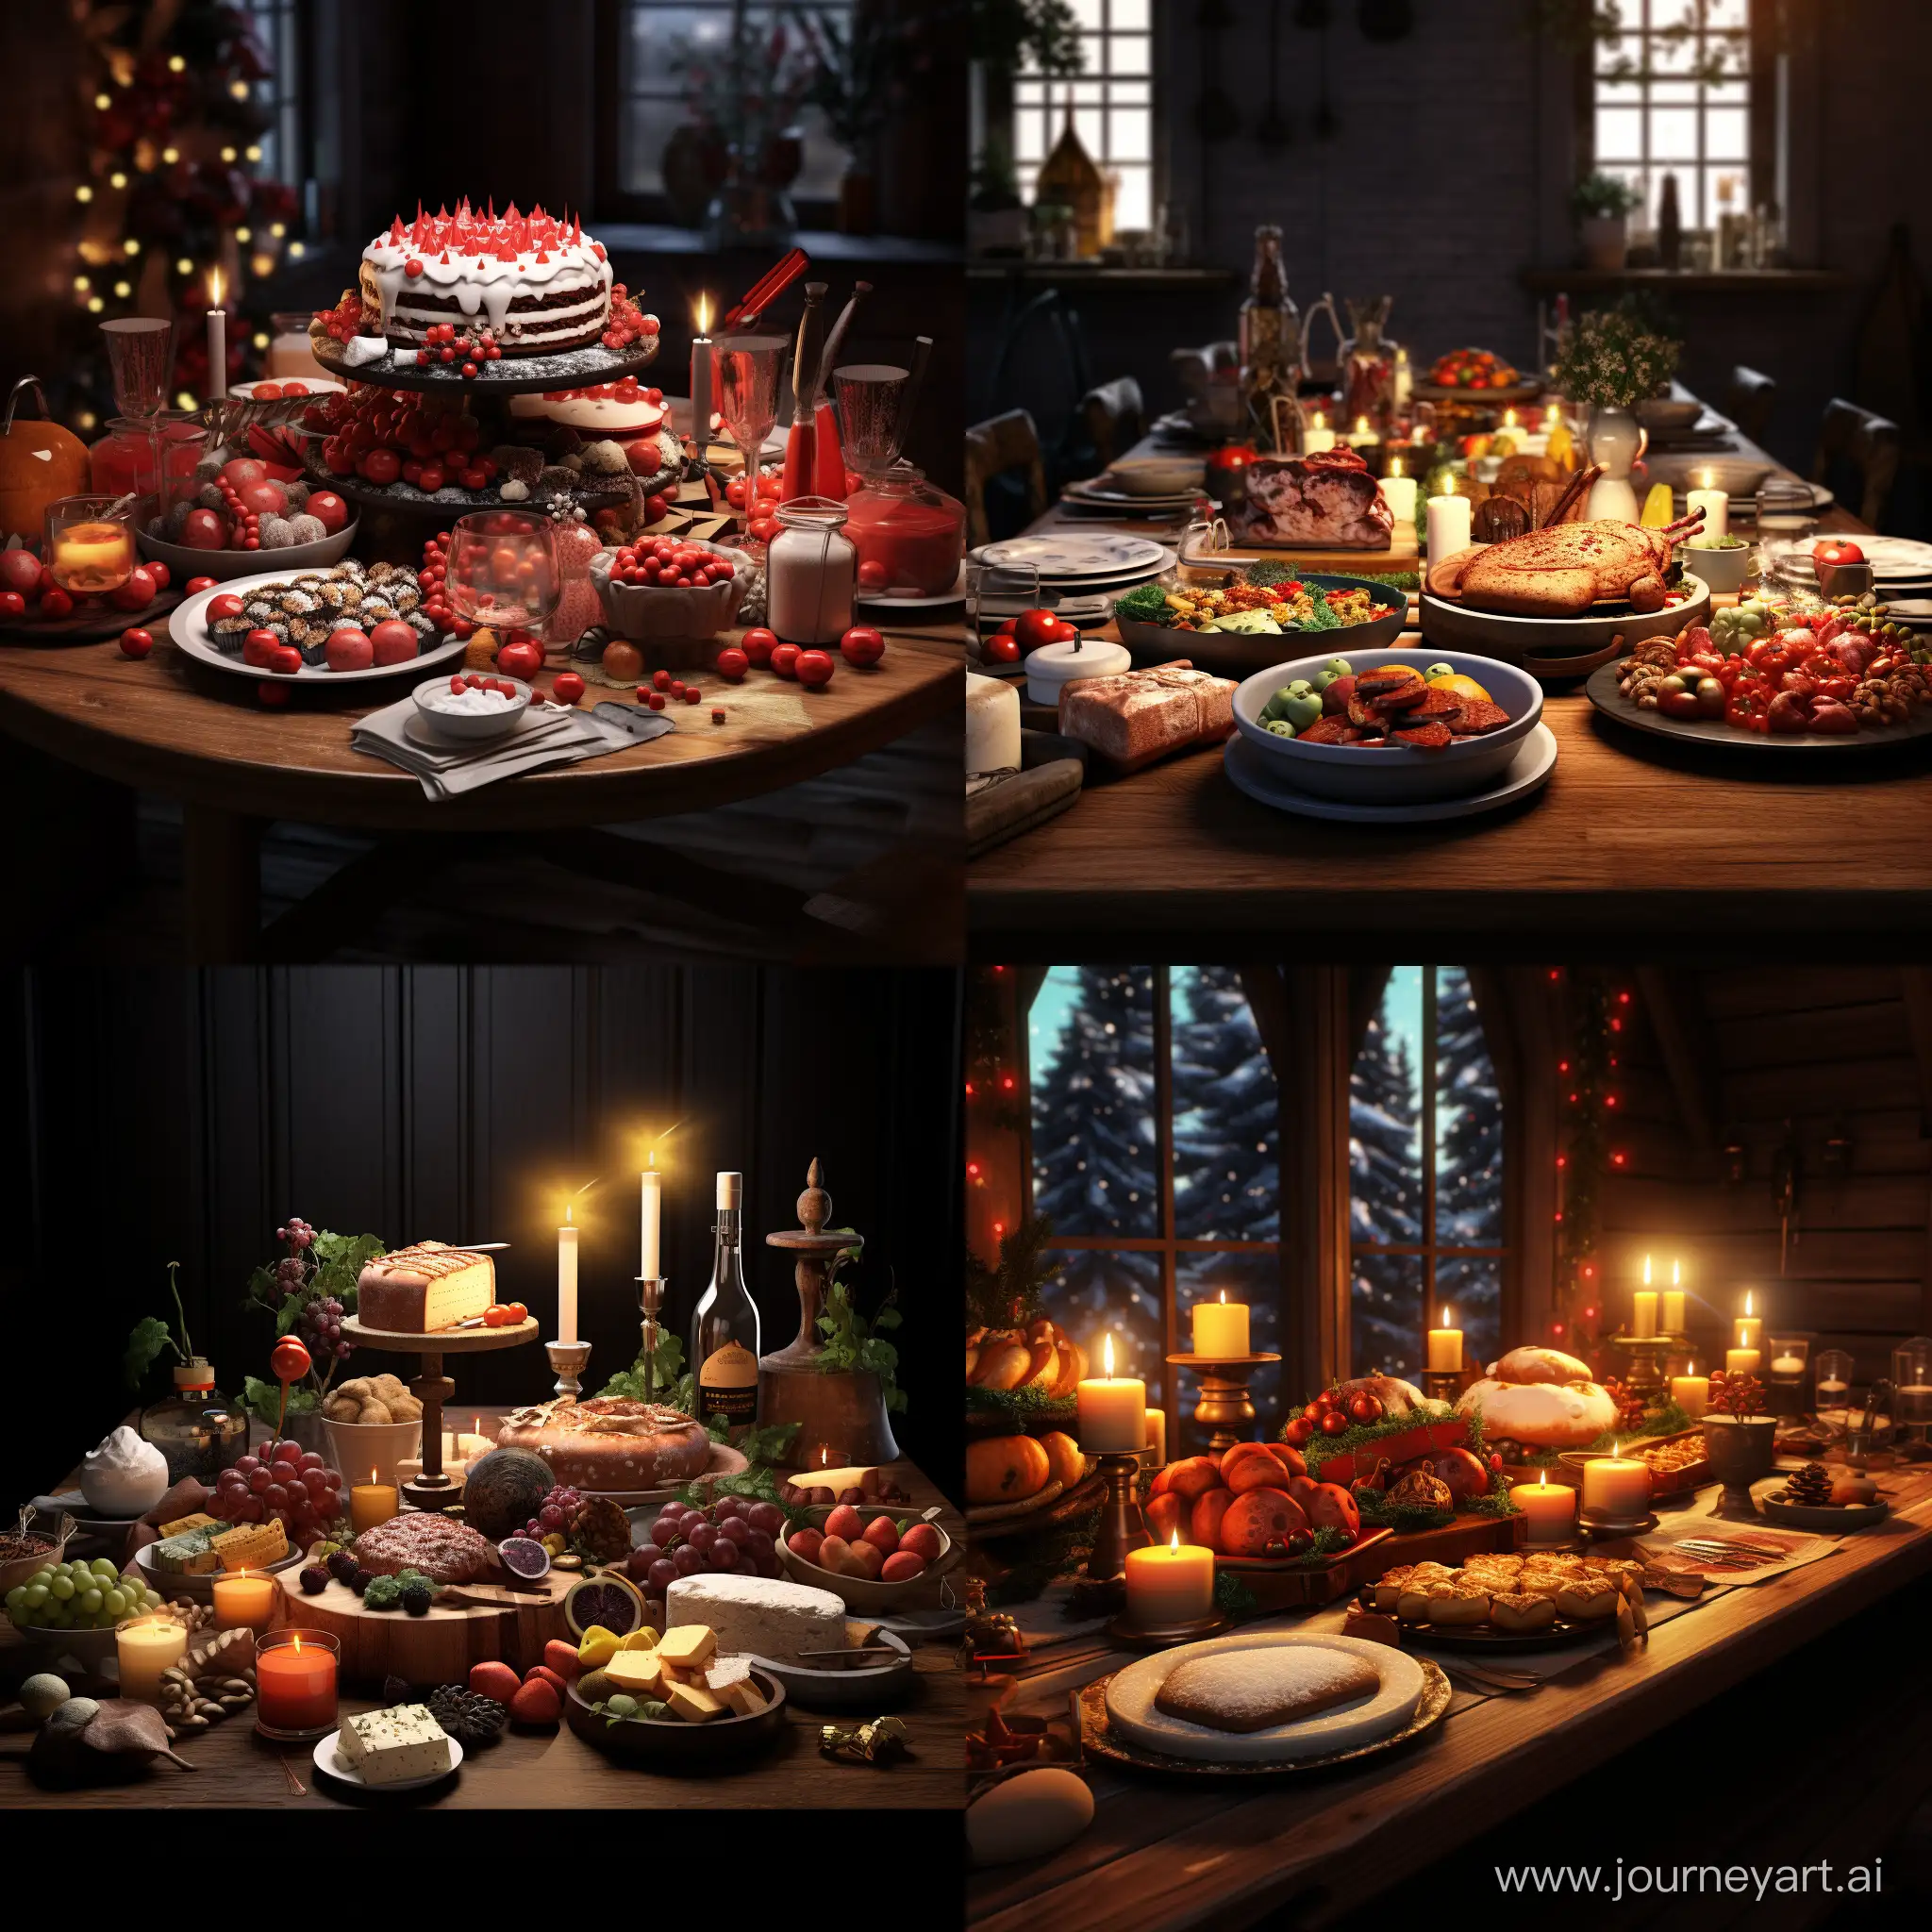 Festive-Christmas-Table-Spread-with-Delightful-3D-Animation